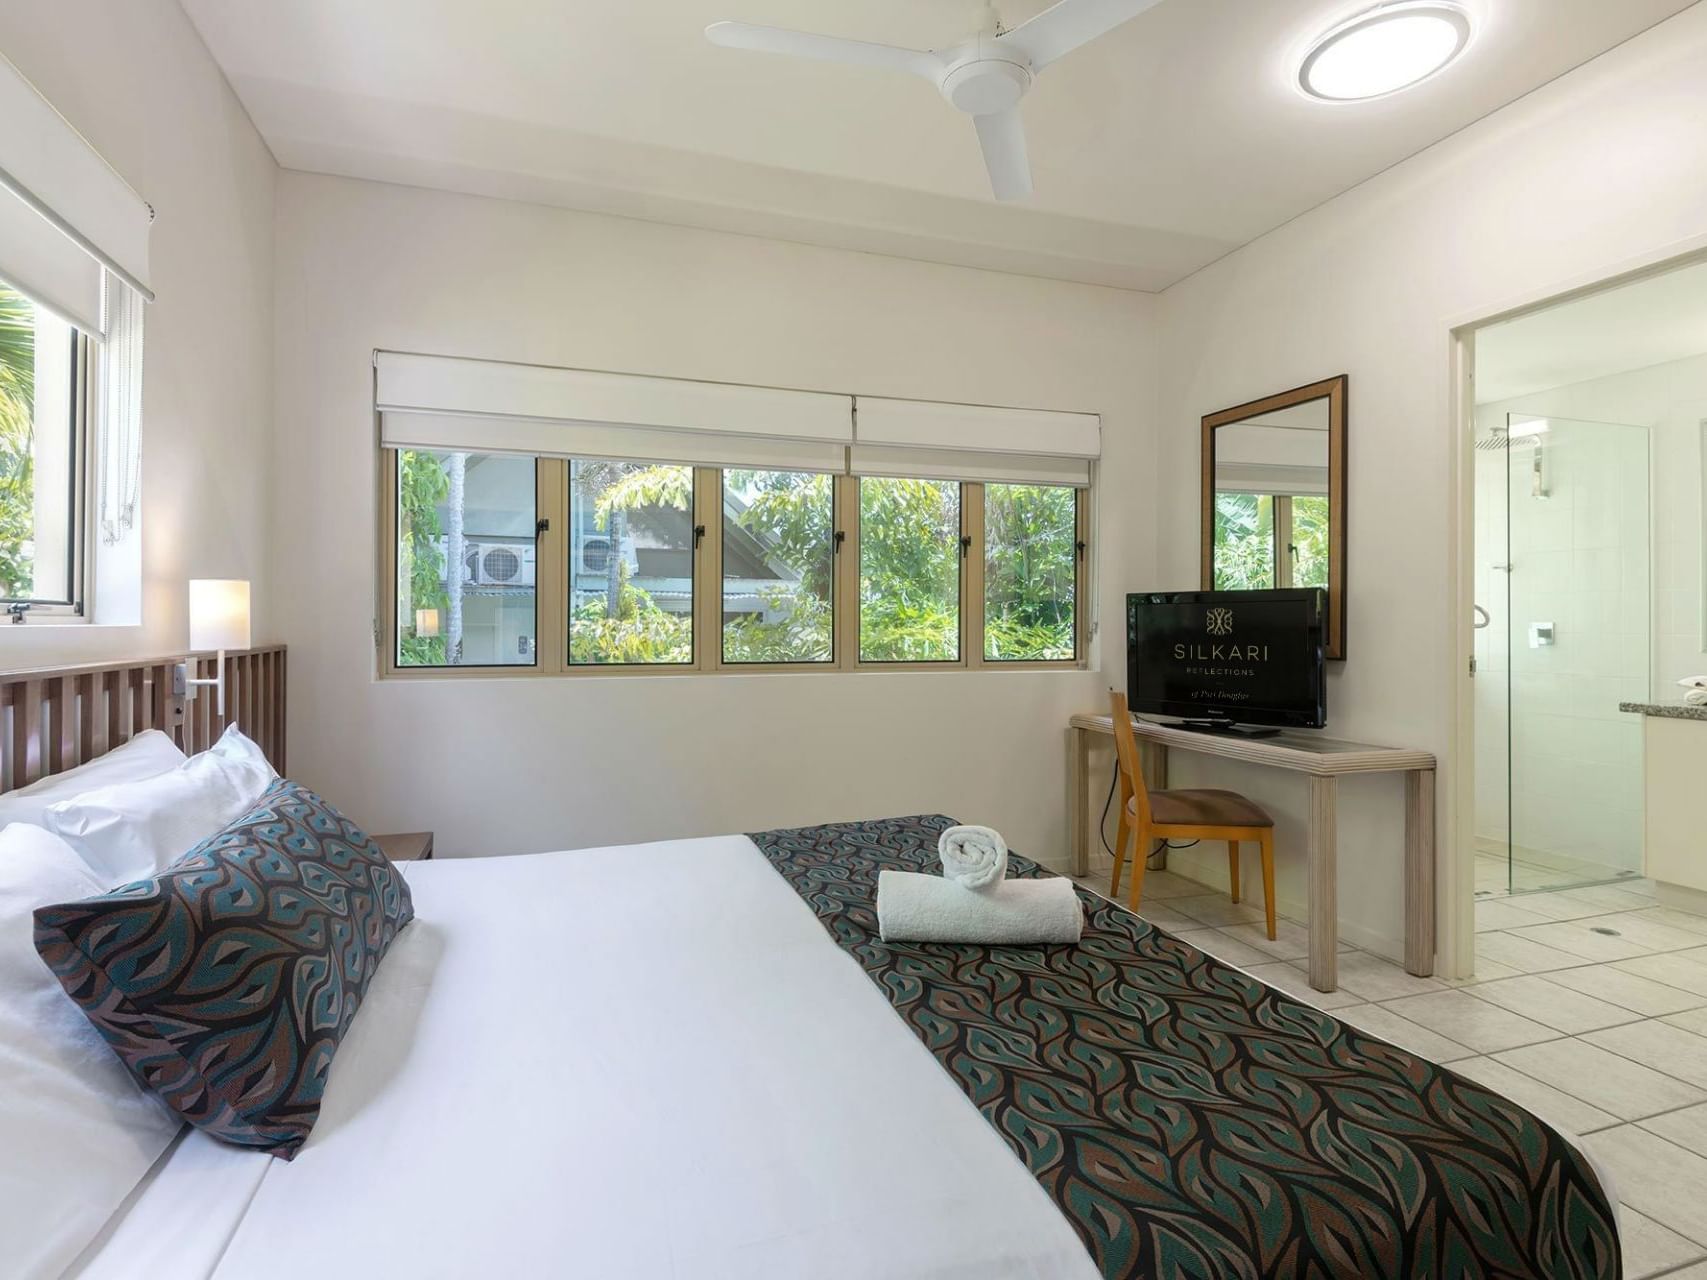 King bed in 3 Bedroom Superior Apartment at Silkari Reflections